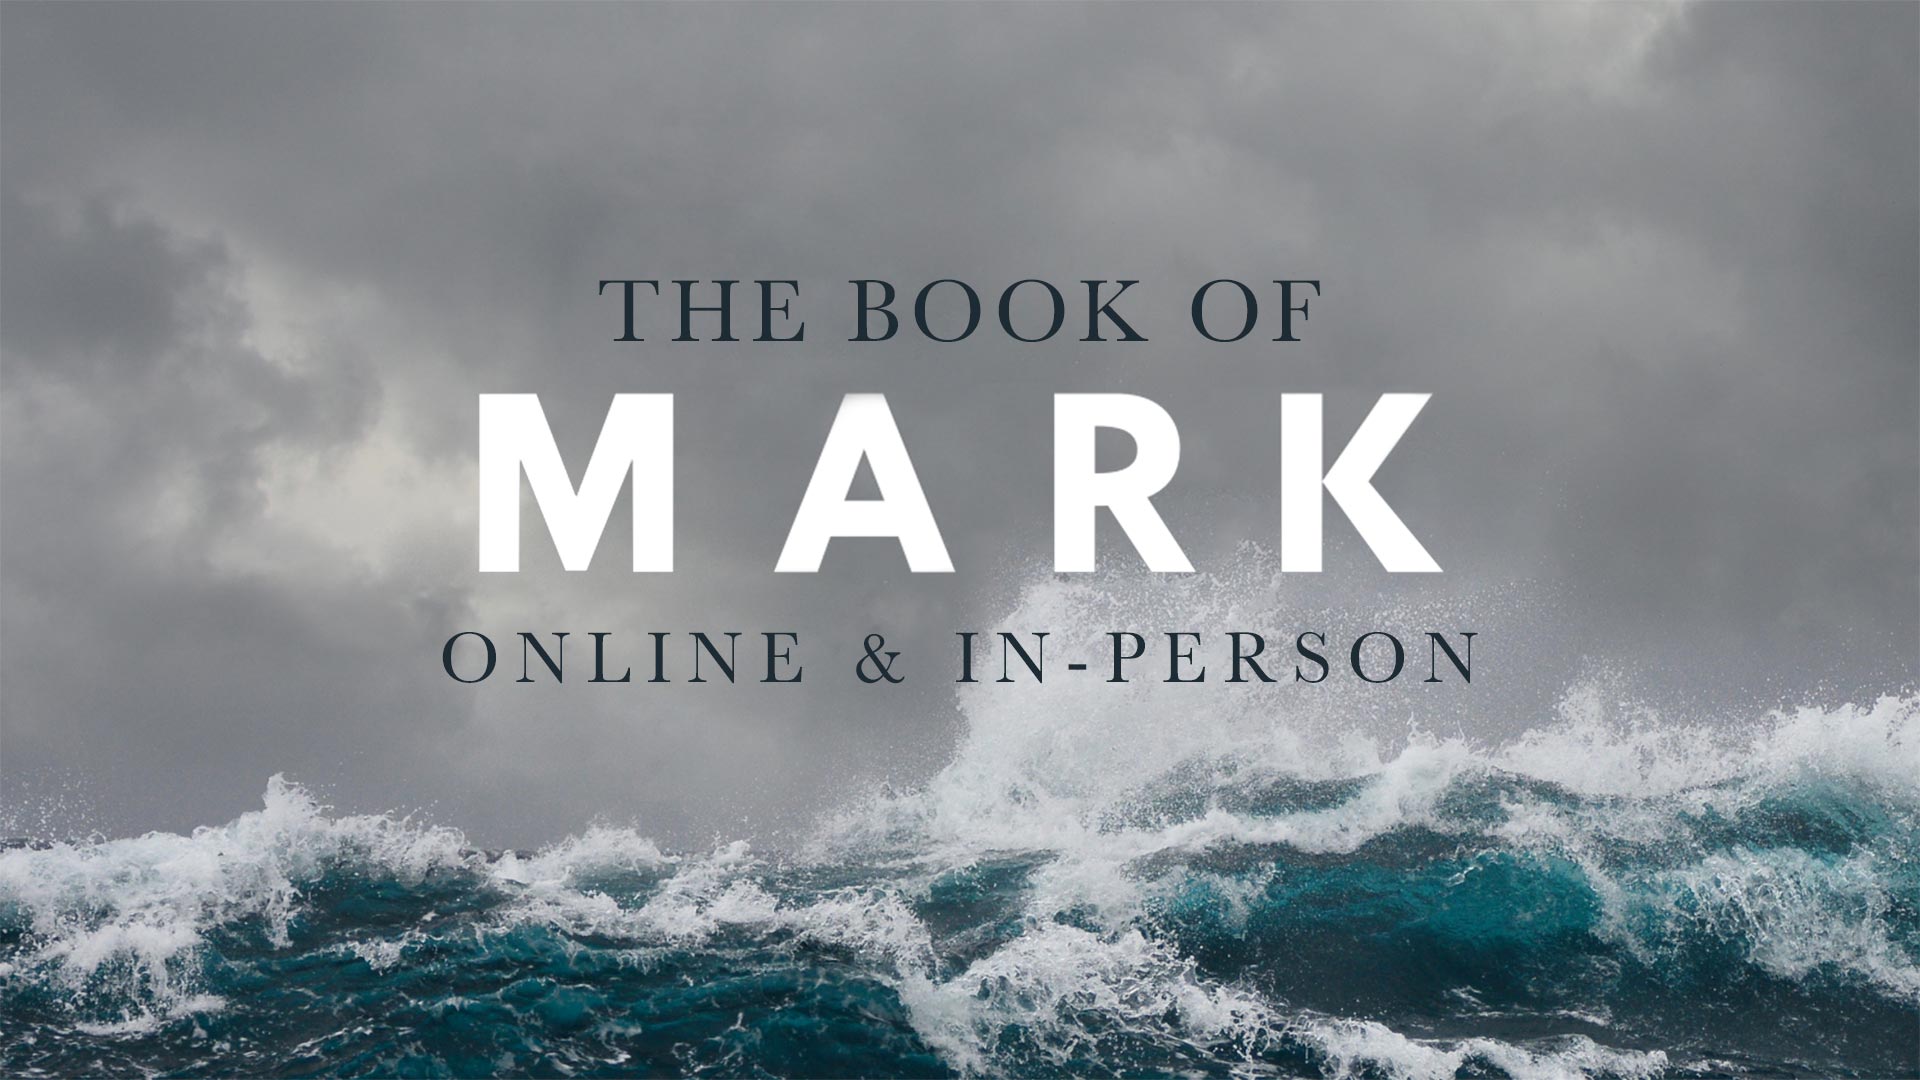 Mark Bible Study